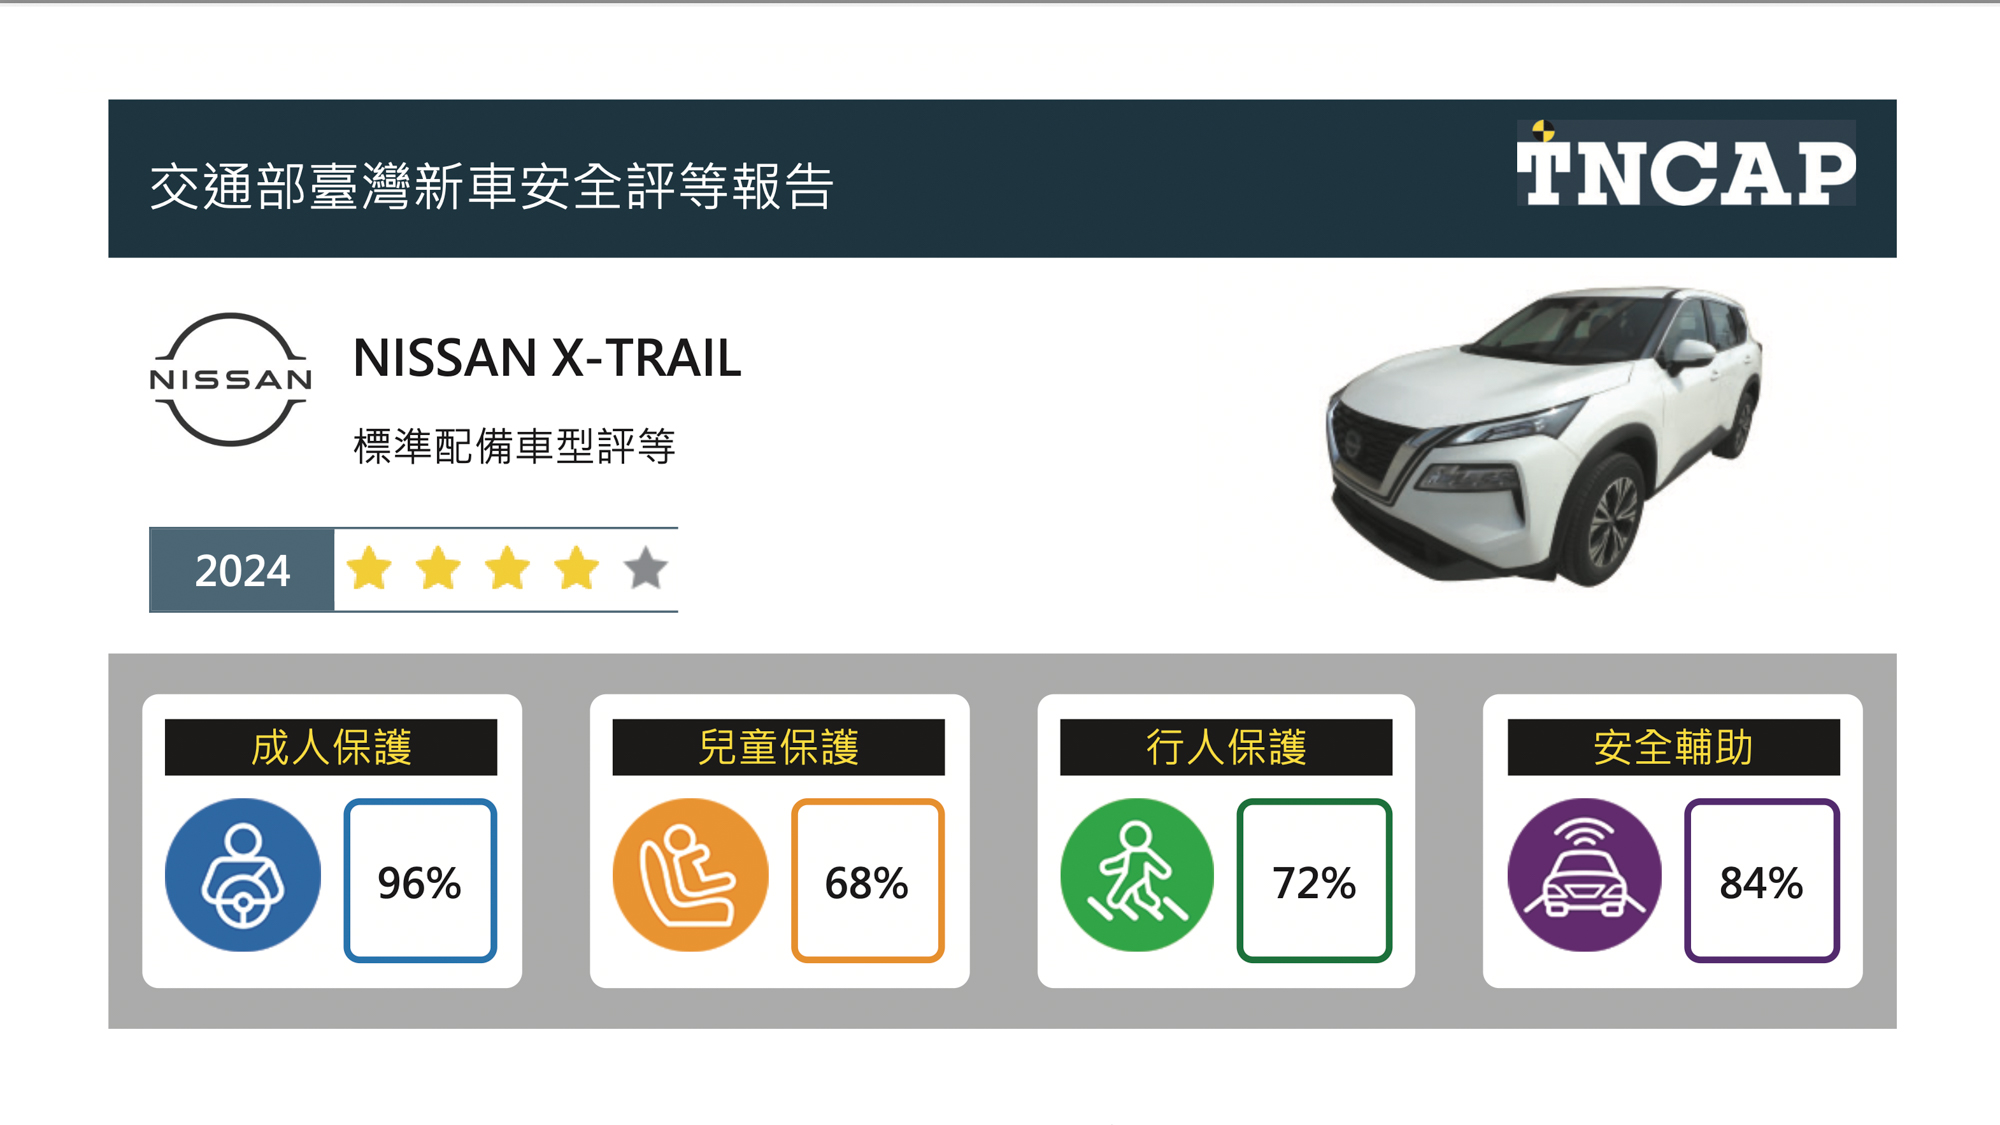 TNCAP 最新撞擊測試結果出爐！Nissan X-Trail 獲四星評等成績